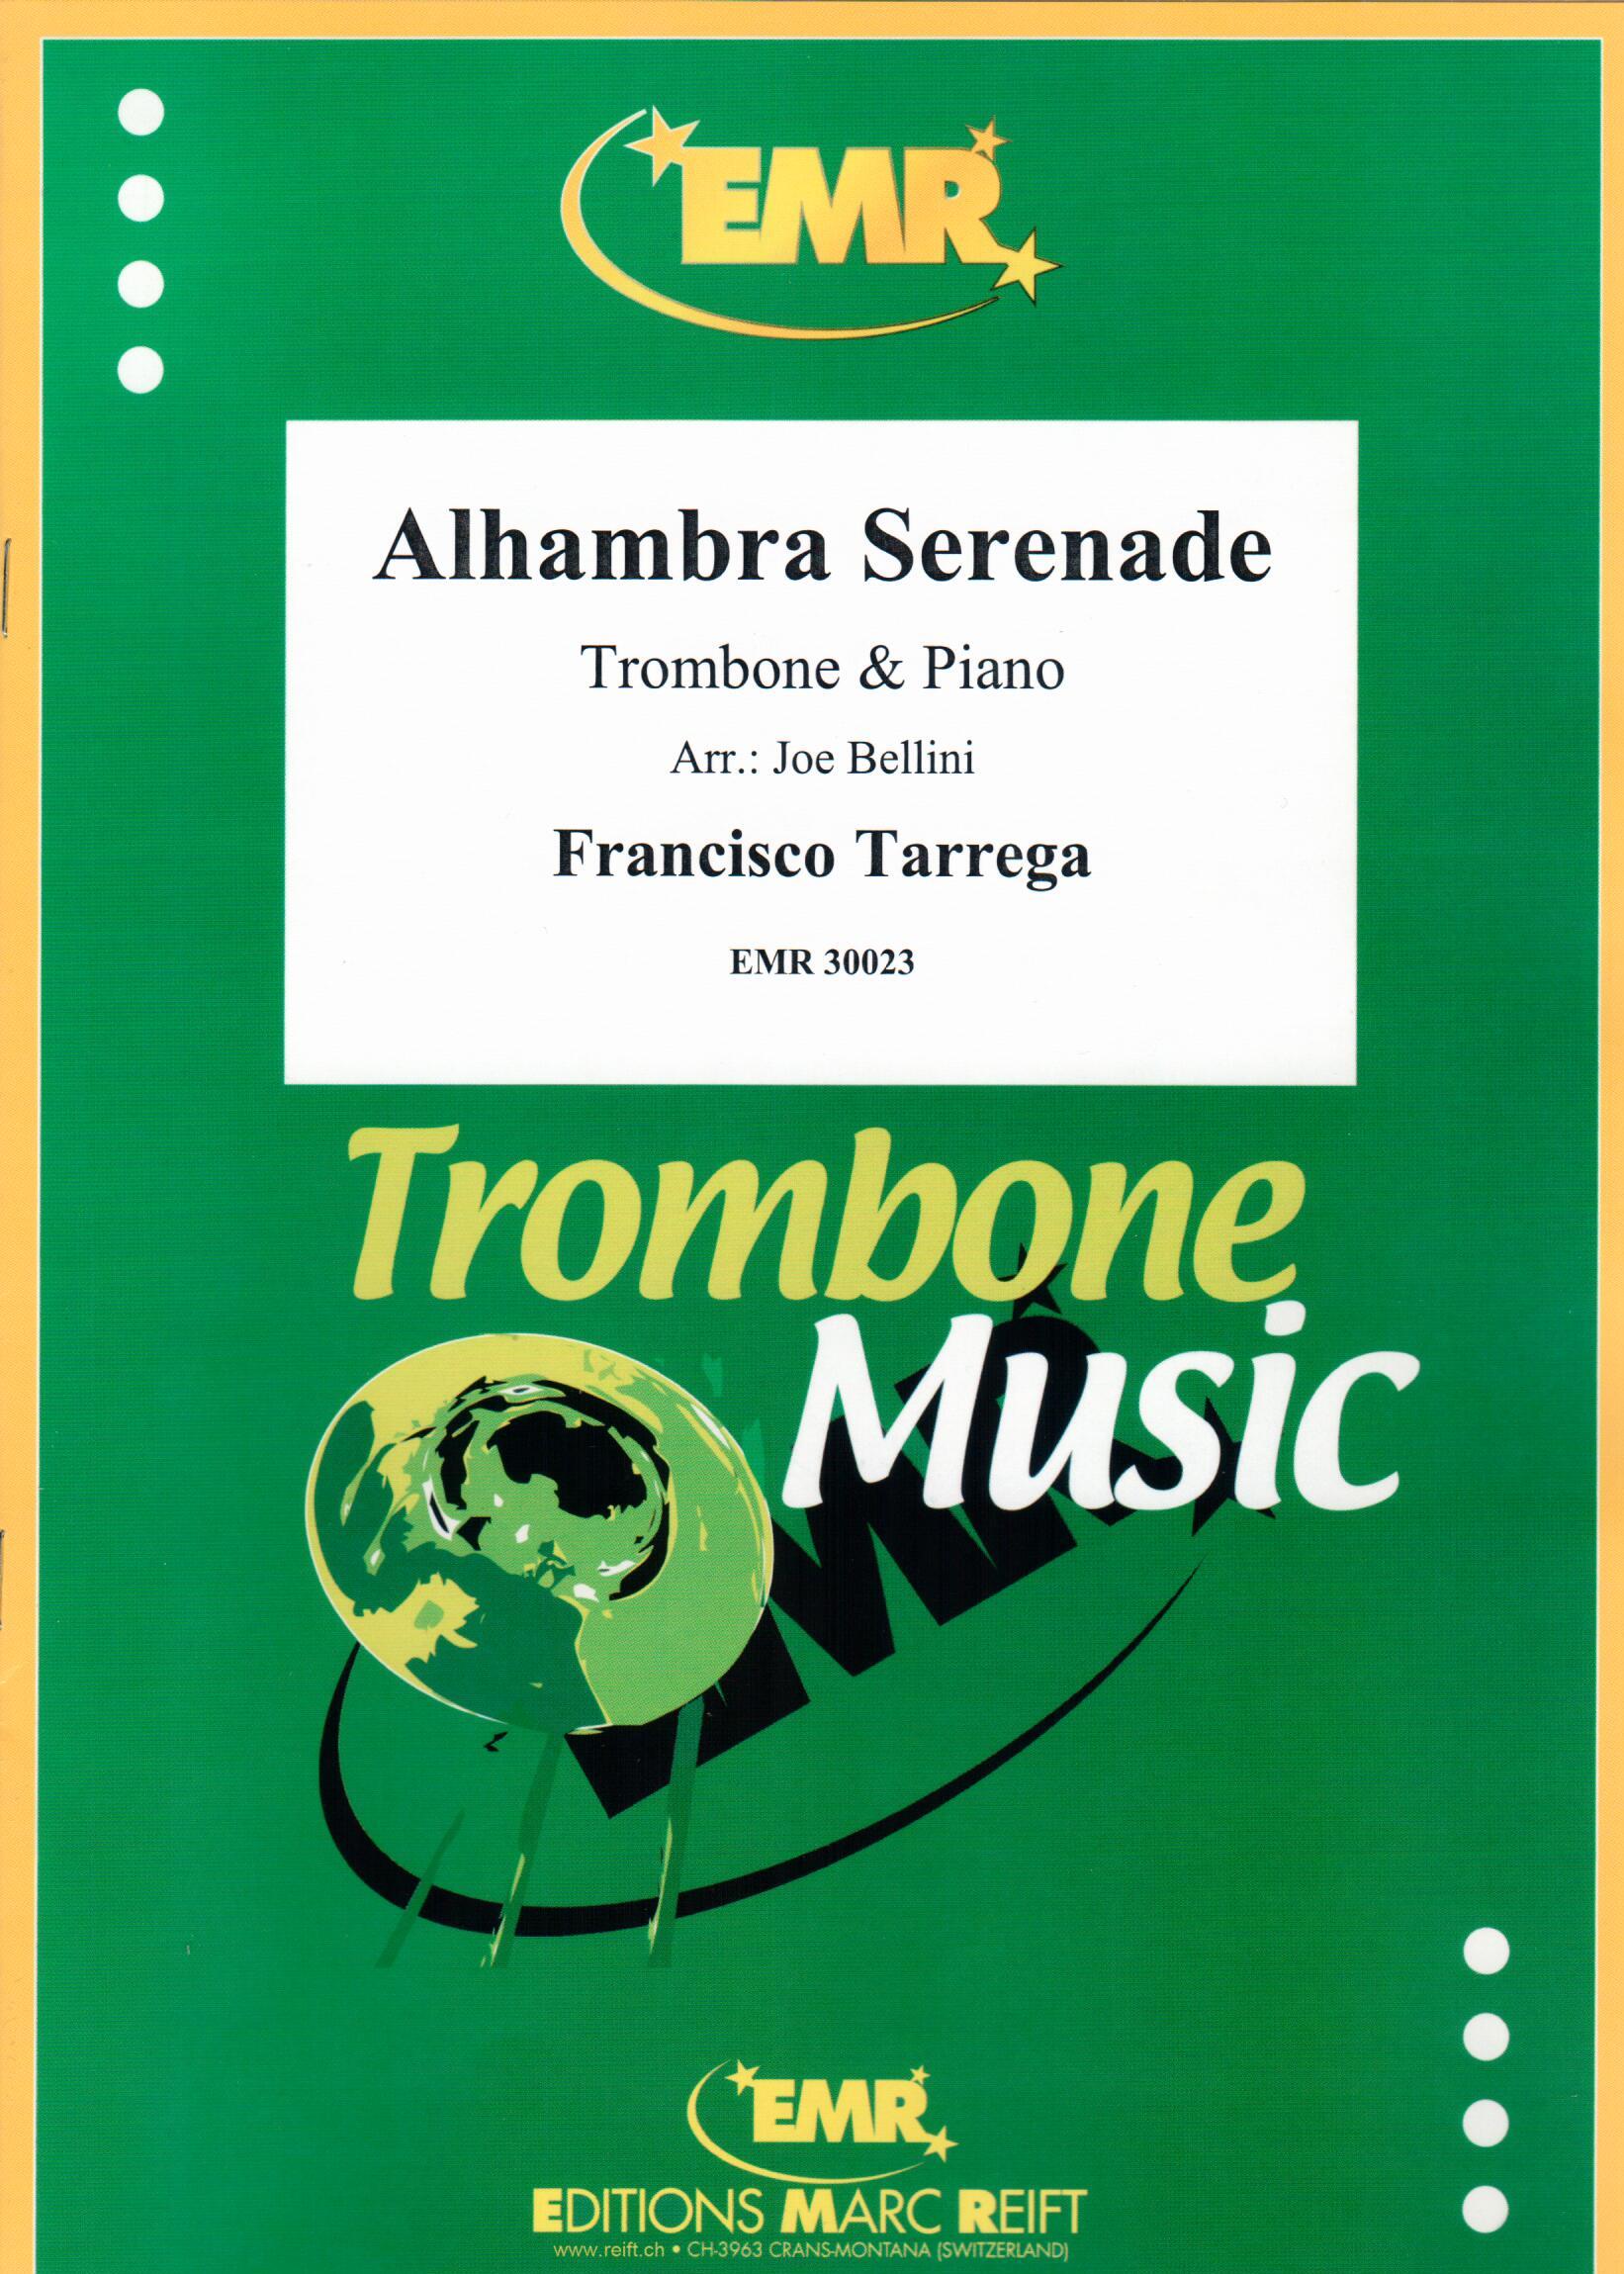 ALHAMBRA SERENADE, SOLOS - Trombone